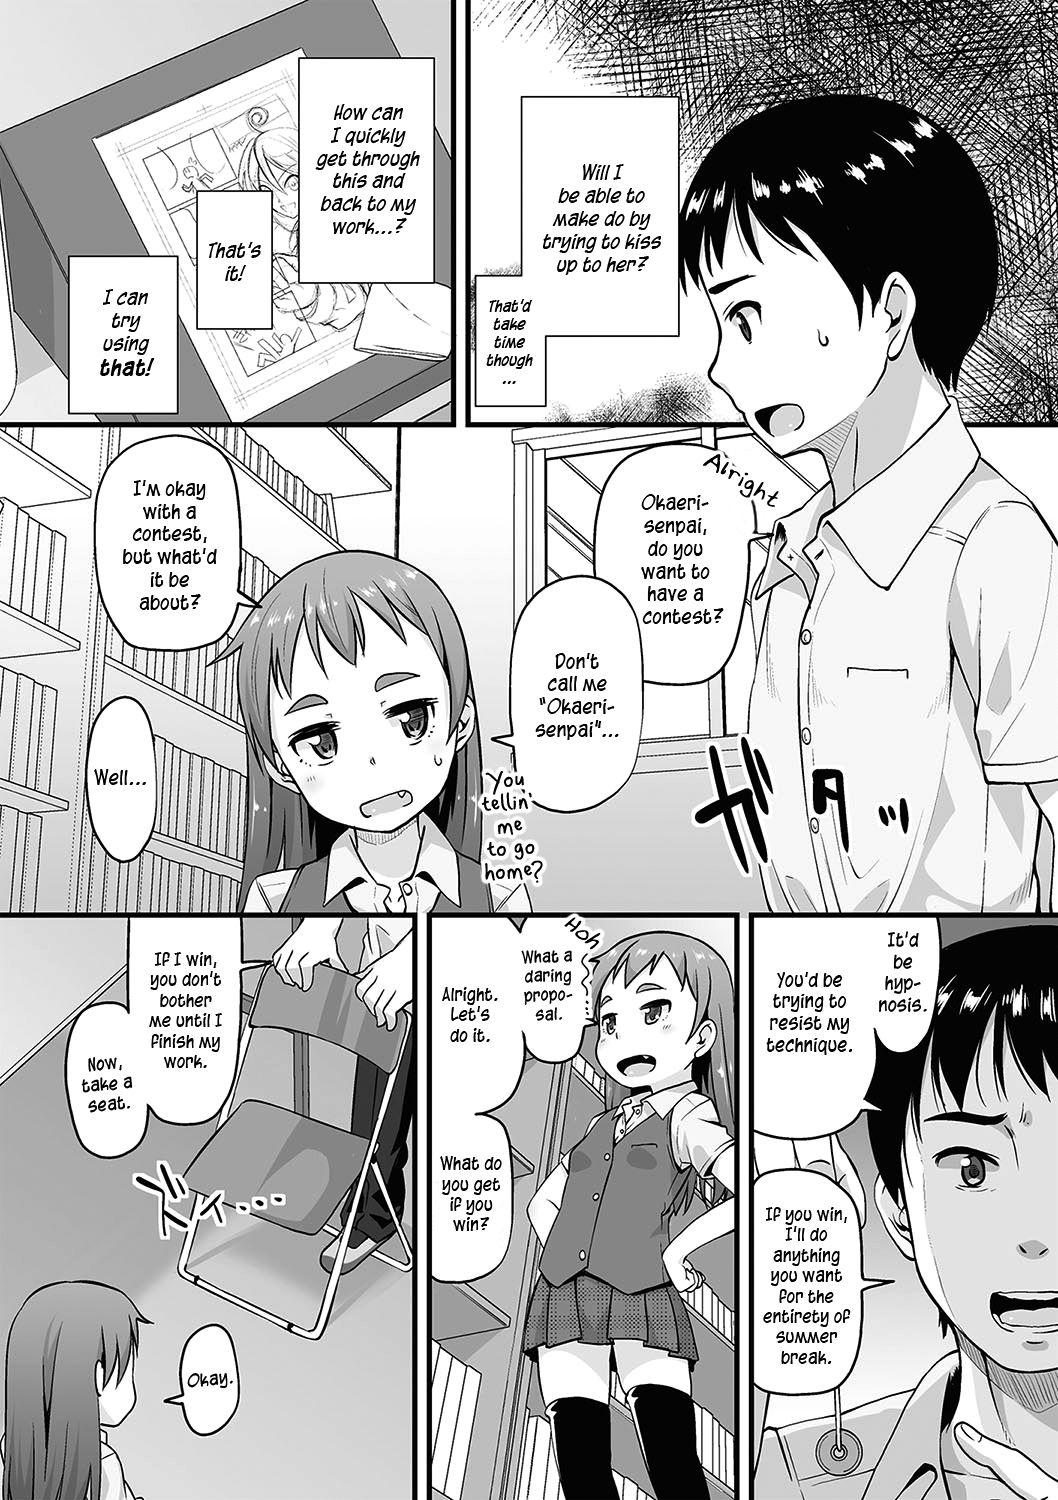 Manga Club Activity Log 2